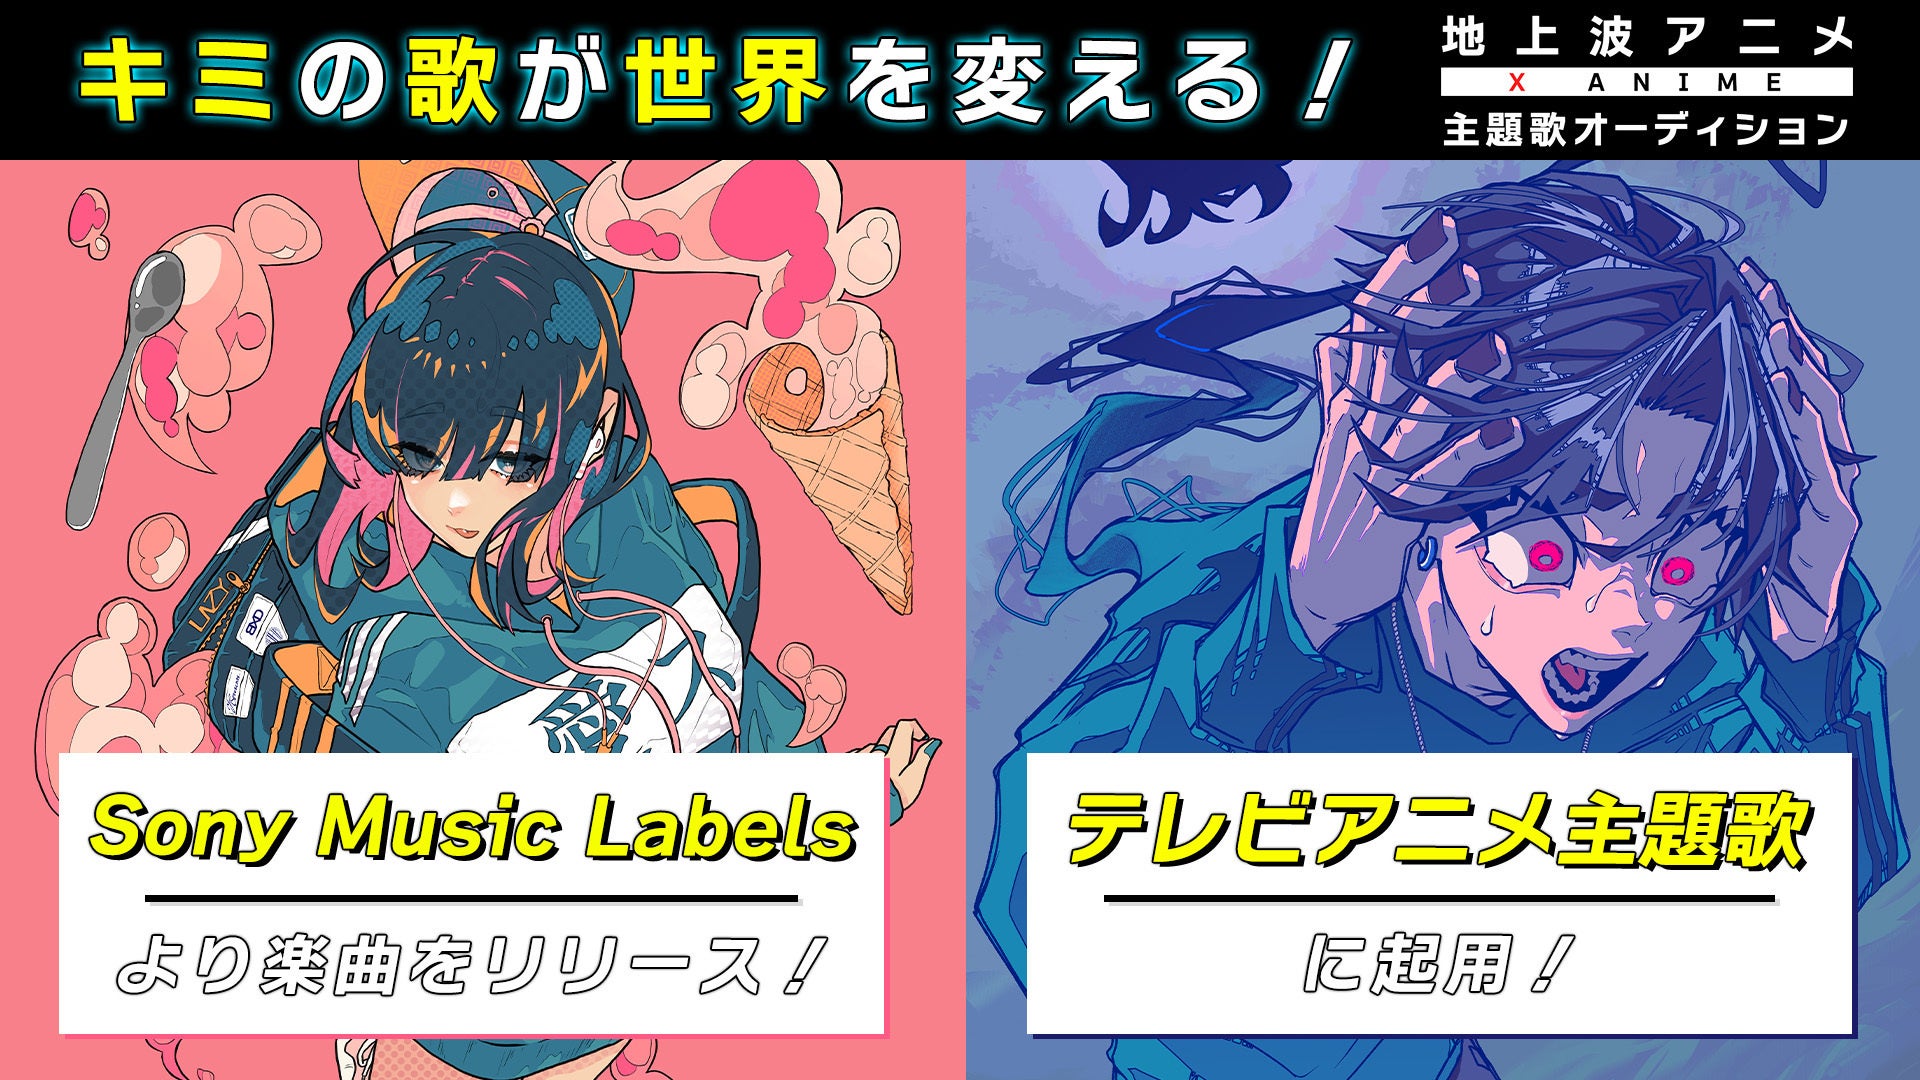 TVアニメプロジェクト「X Anime」の課題曲として新進気鋭ボカロP吐息による新曲公開！ソニー・ミュージックレーベルズより10月26日リリース！